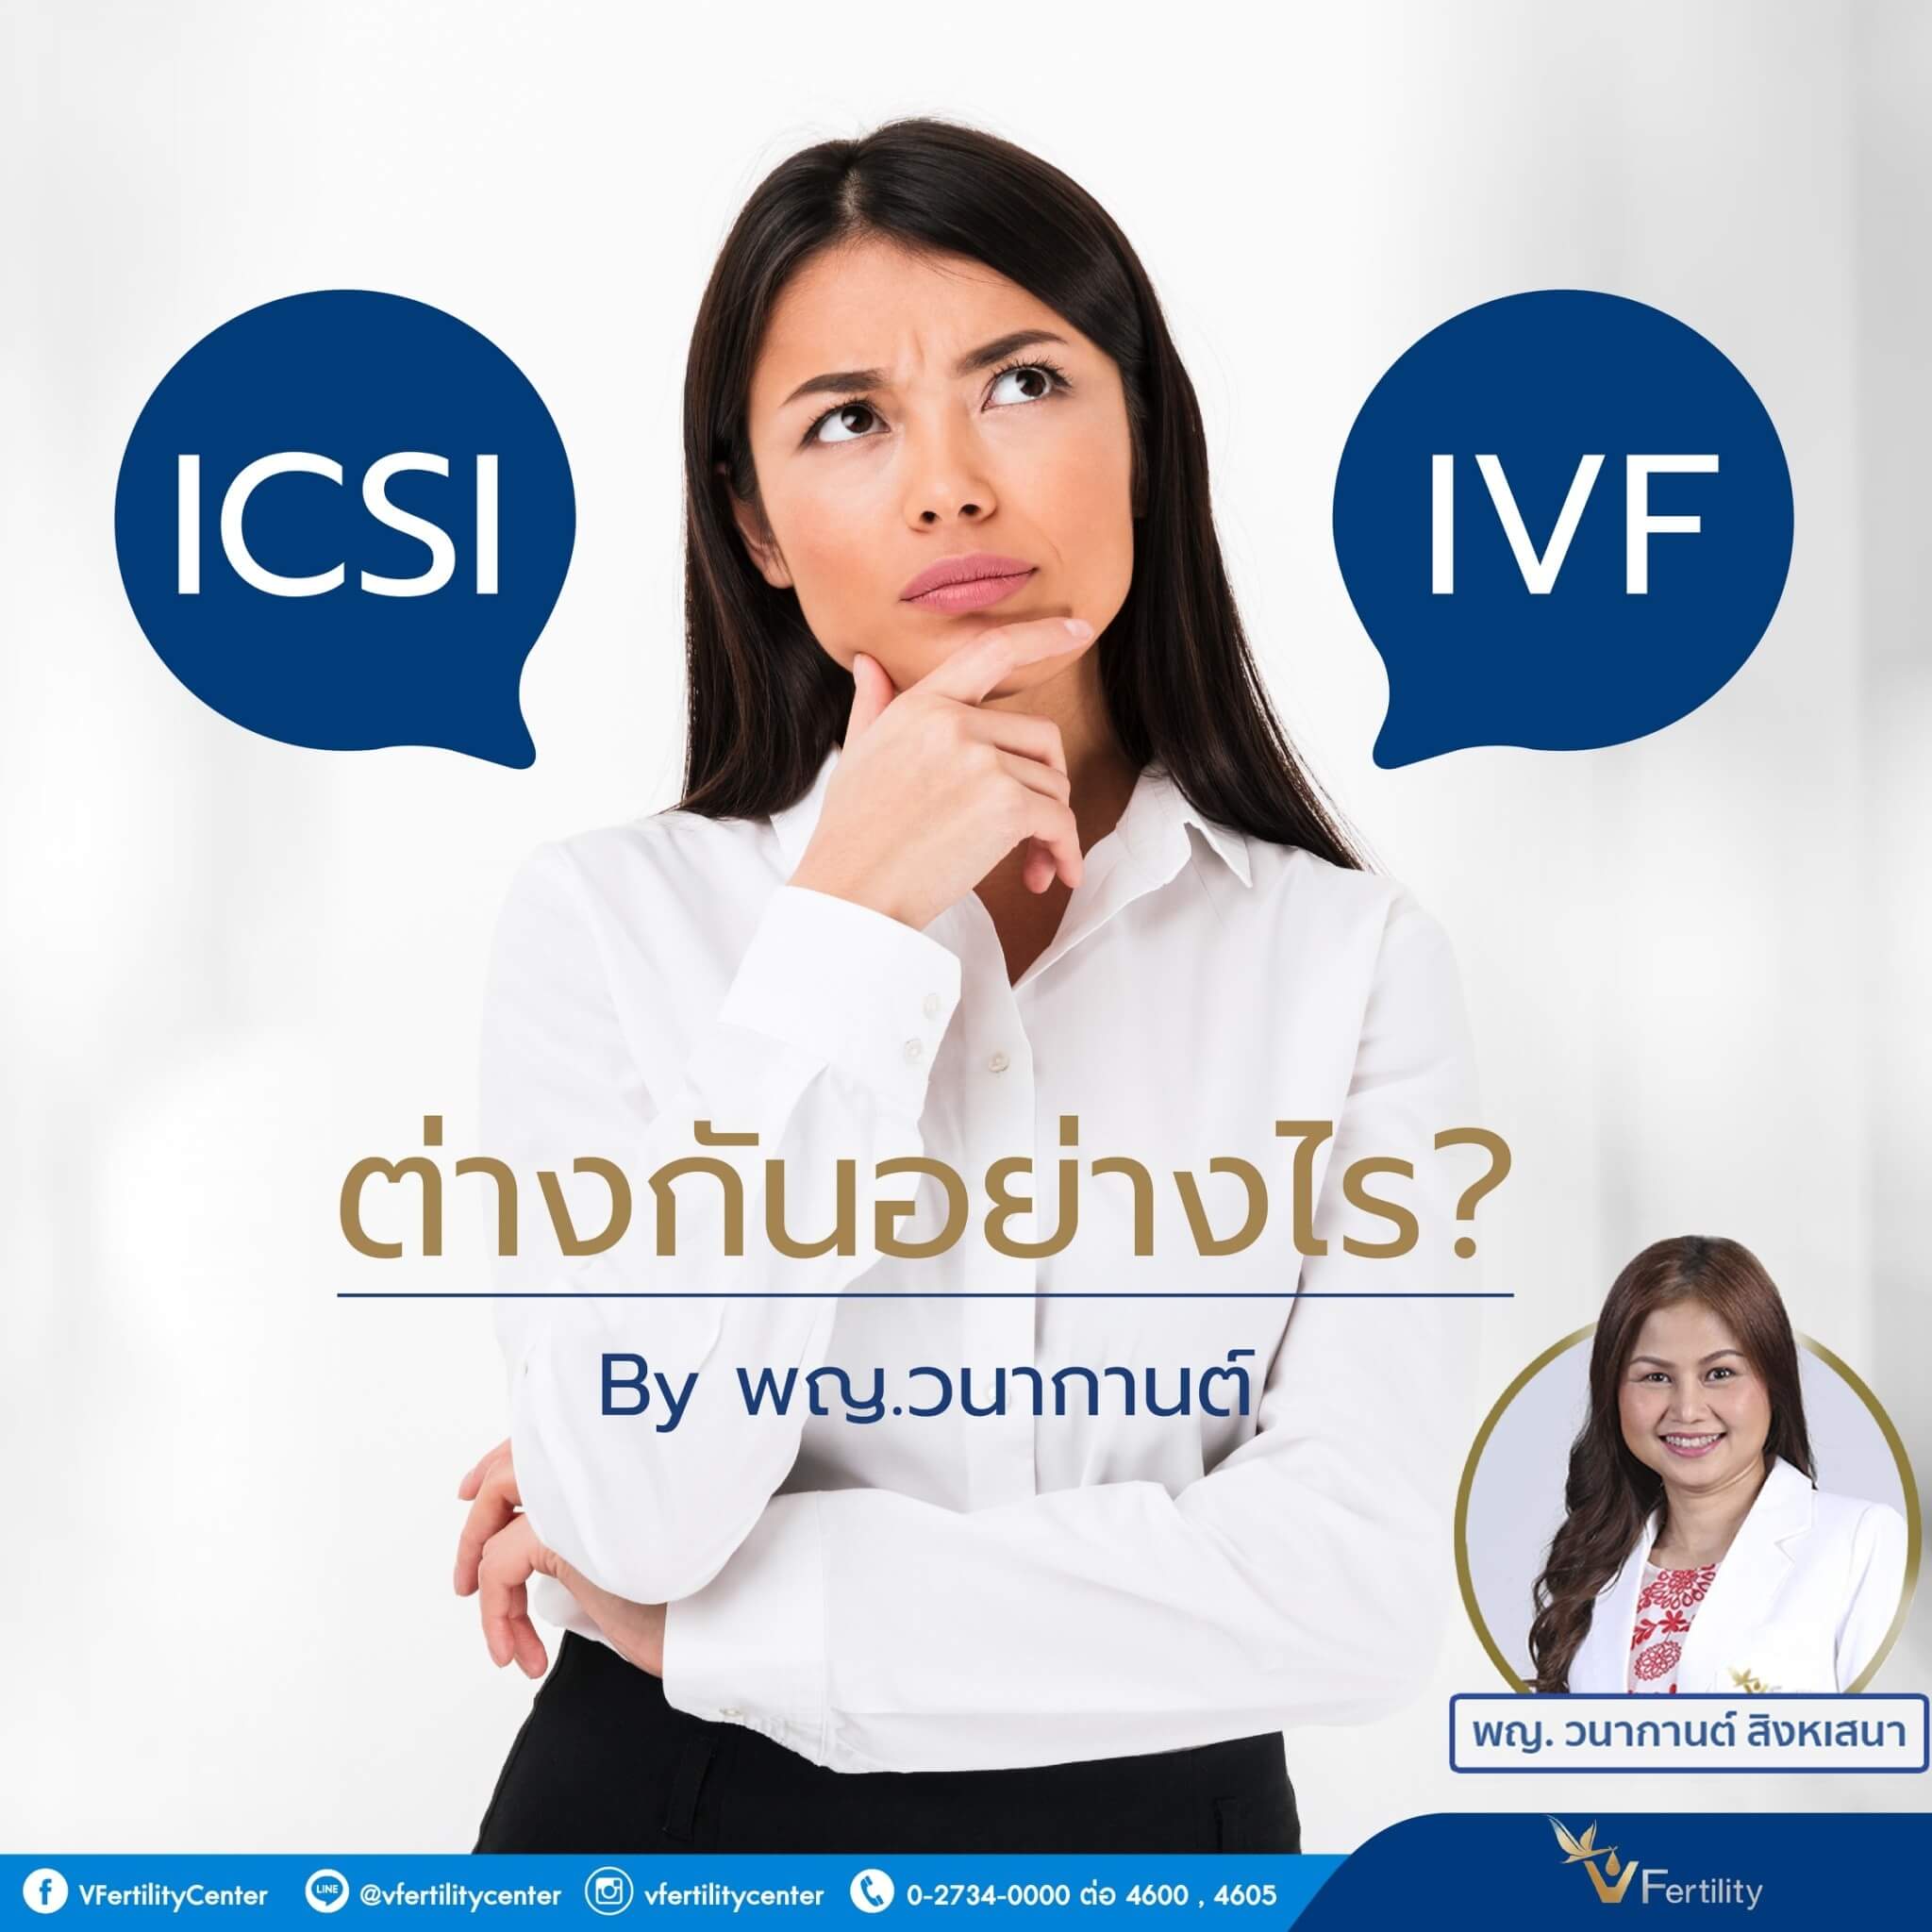 ICSI กับ IVF ต่างกันอย่างไร?